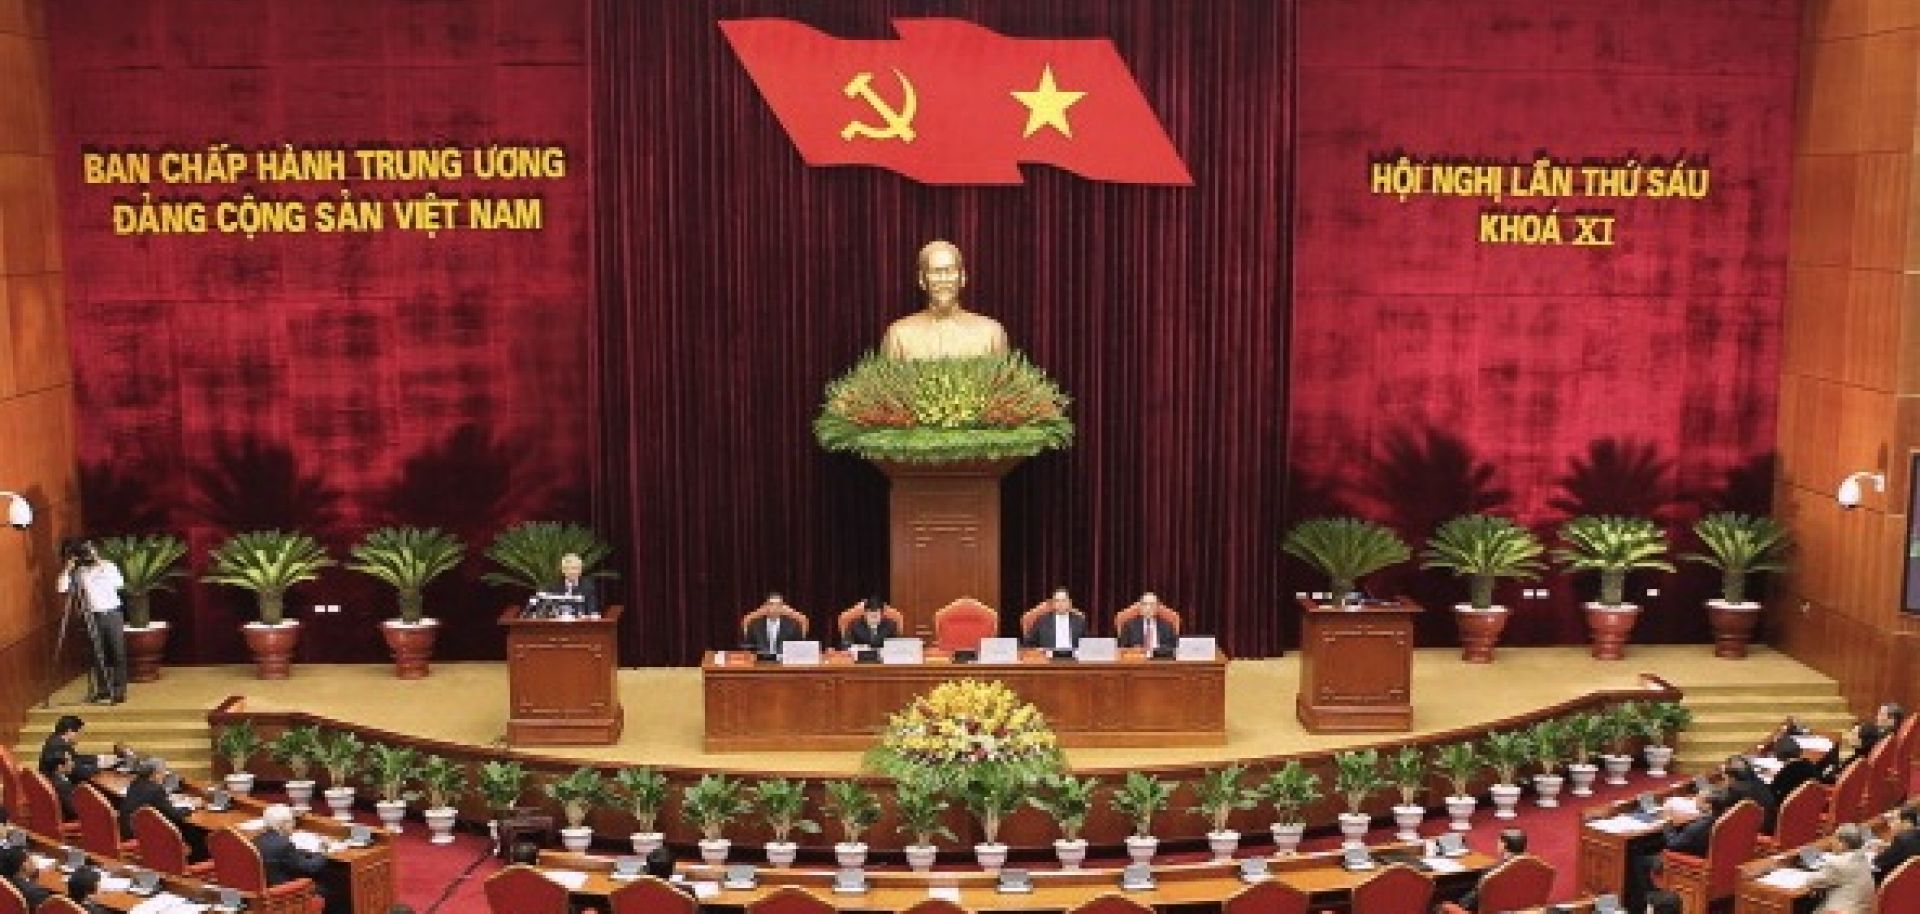 Political Reform and Vietnam's Communist Party